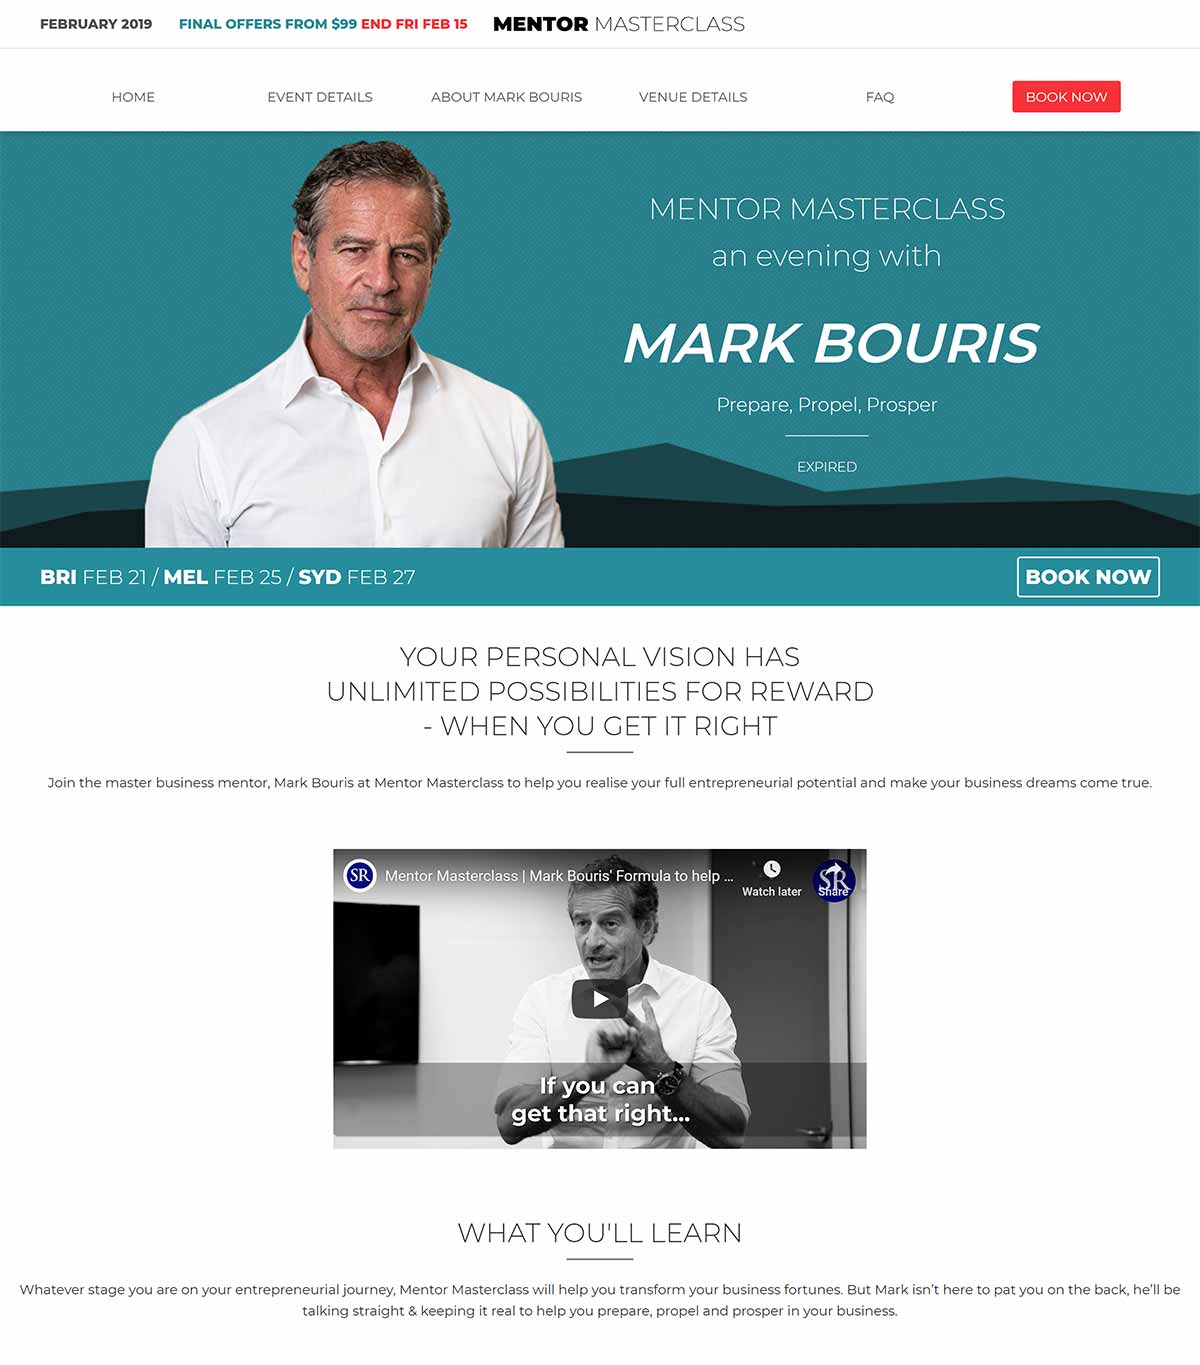 Mark Bouris' Mentor Masterclass